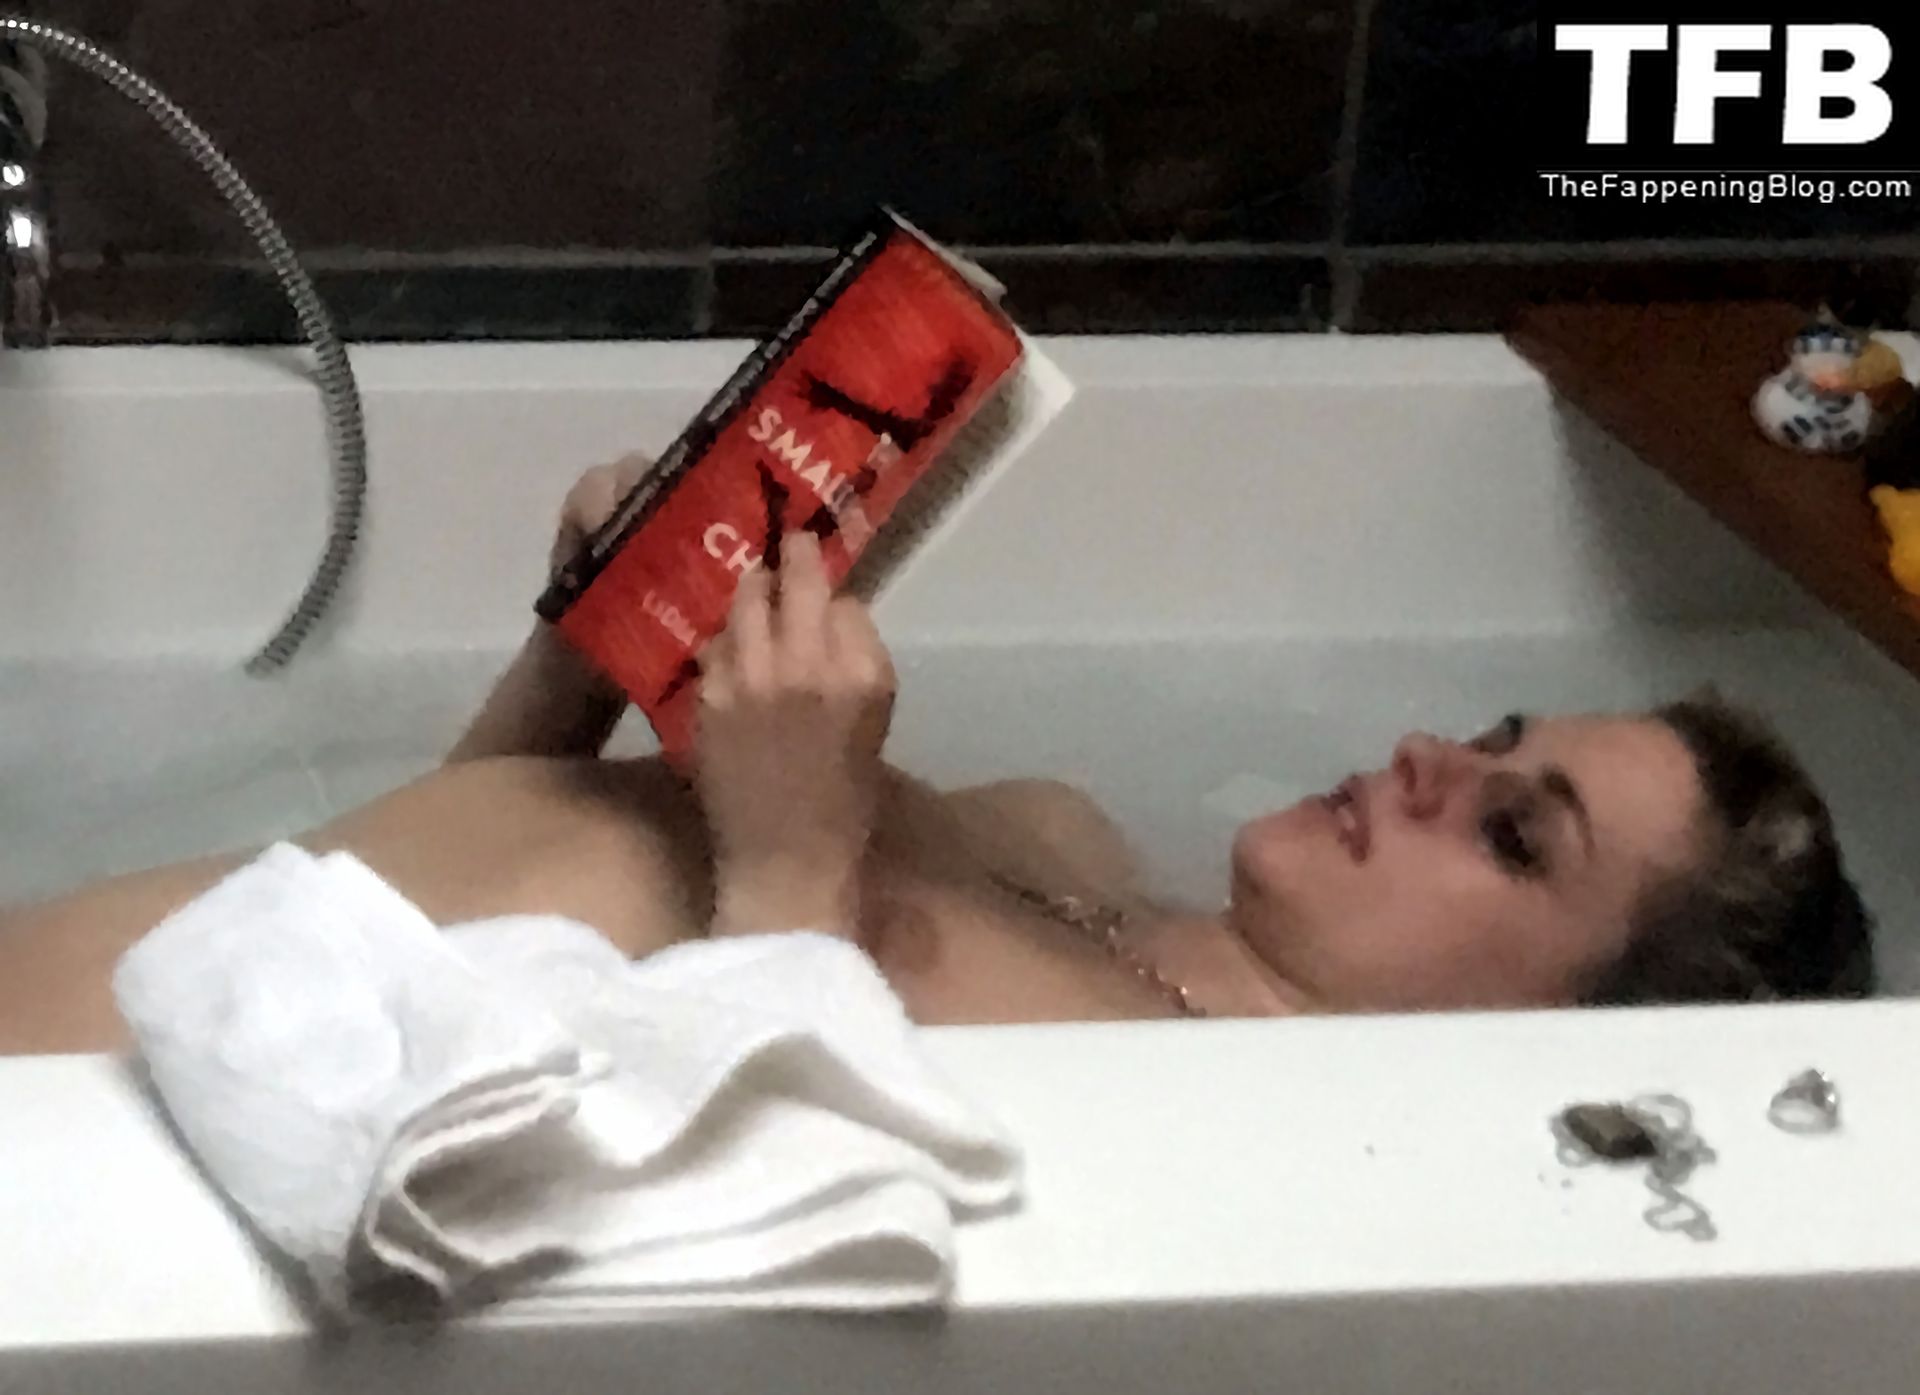 Kristen-Stewart-Nude-Leaked-The-Fappening-Blog-32.jpg